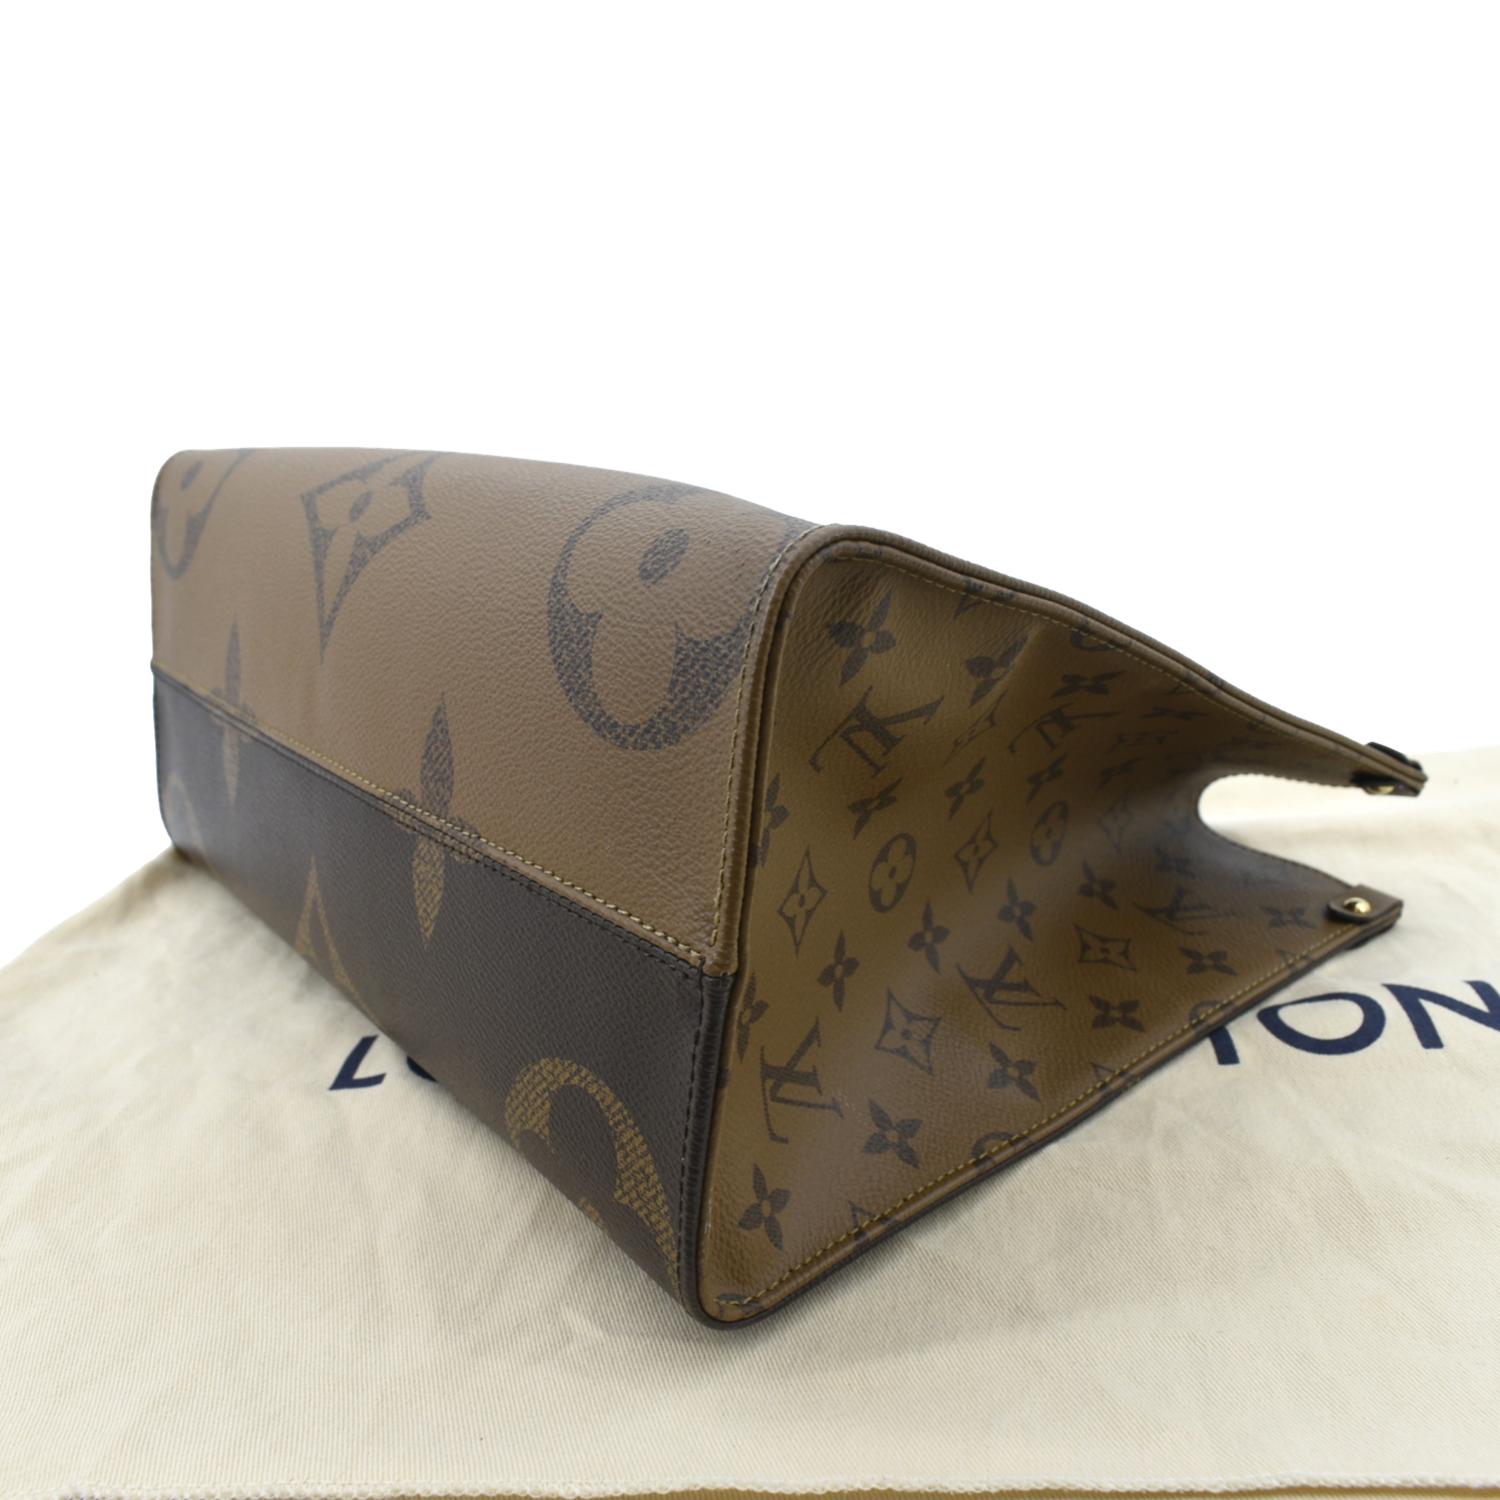 Onthego MM Monogram Canvas - Handbags M45321